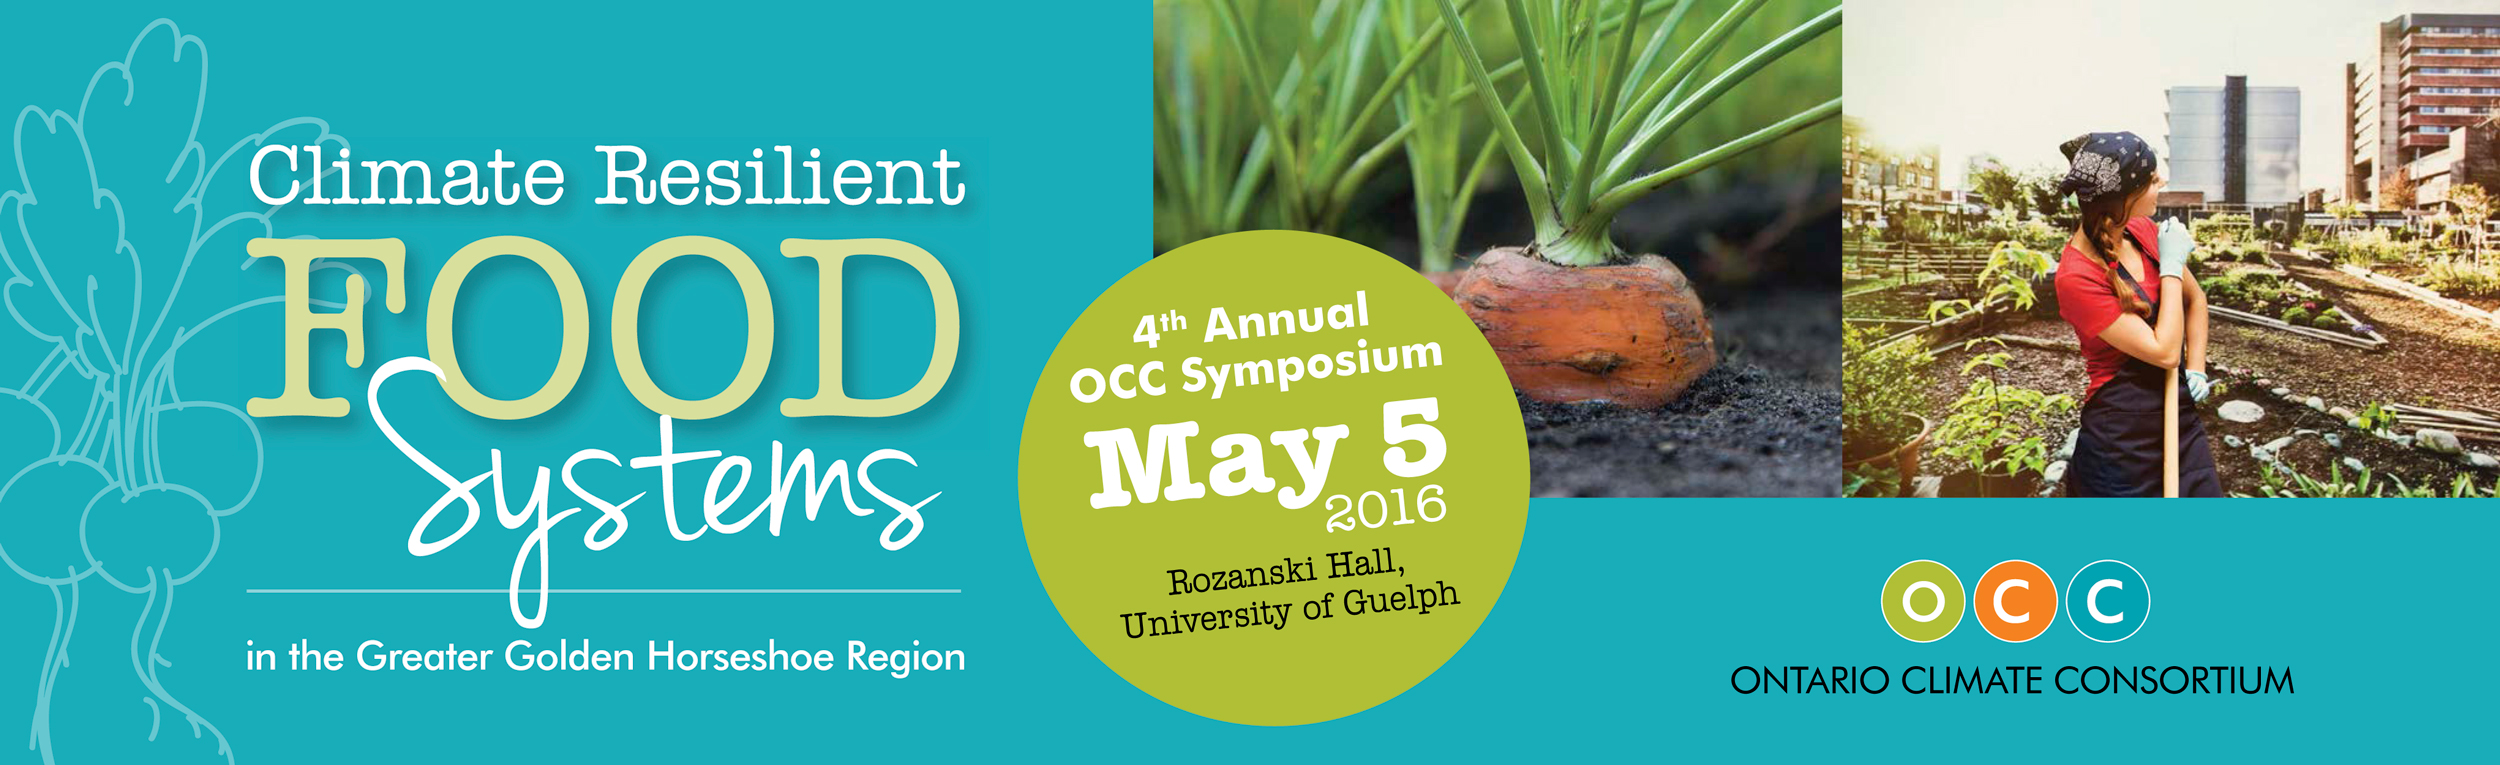 OCC_Symposium2016_WebBanner-1